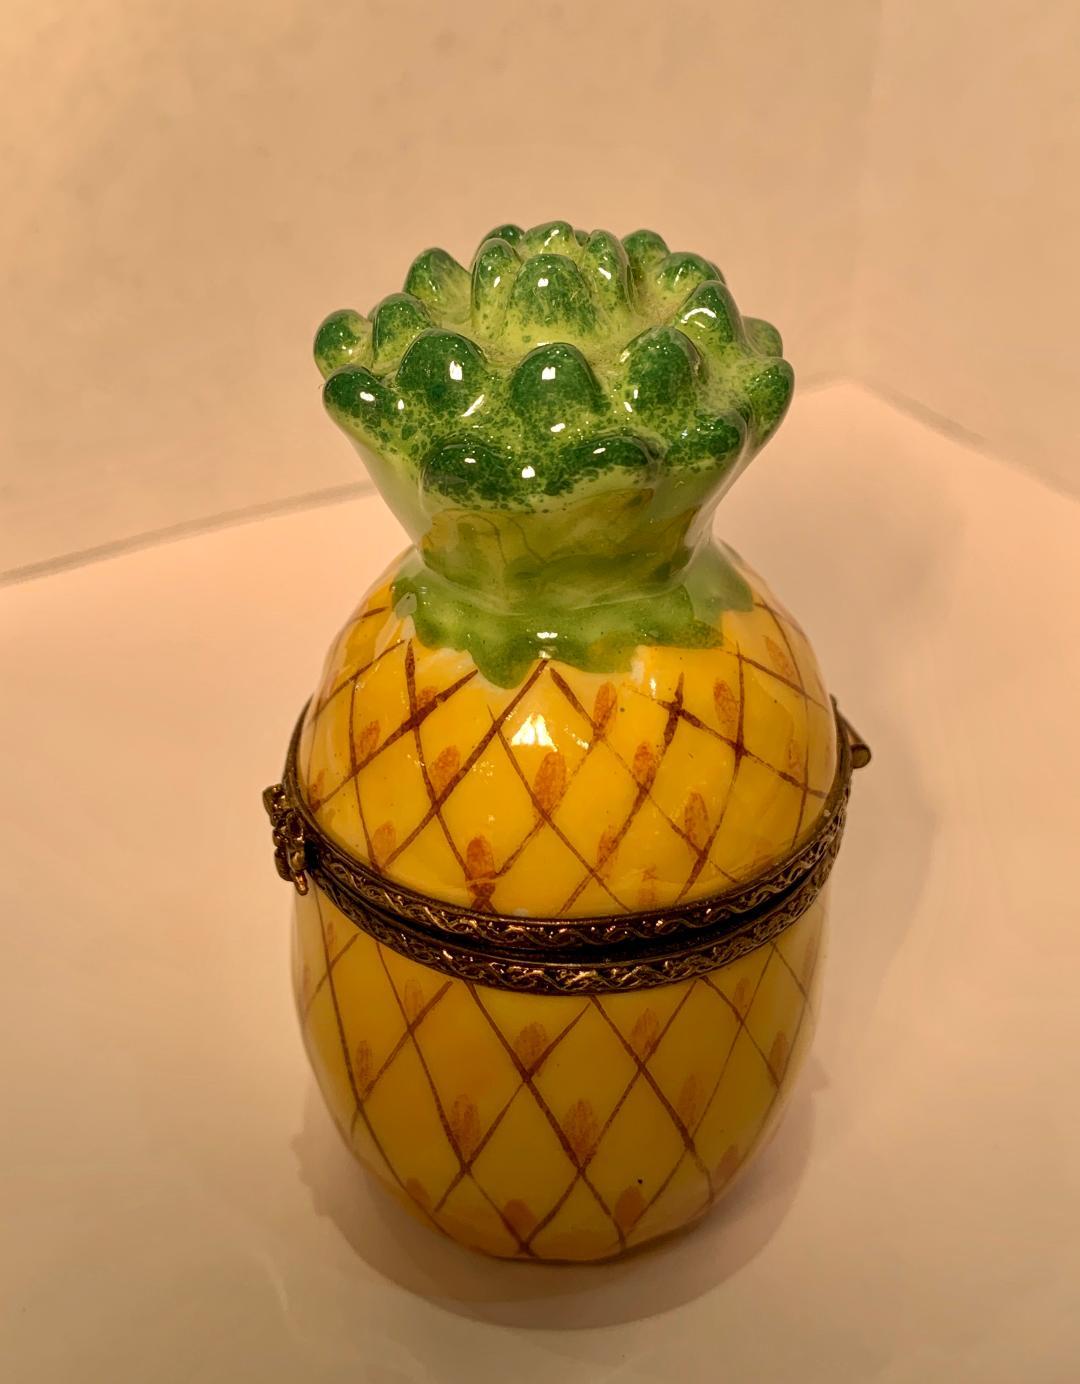 pineapple symbol of hospitality